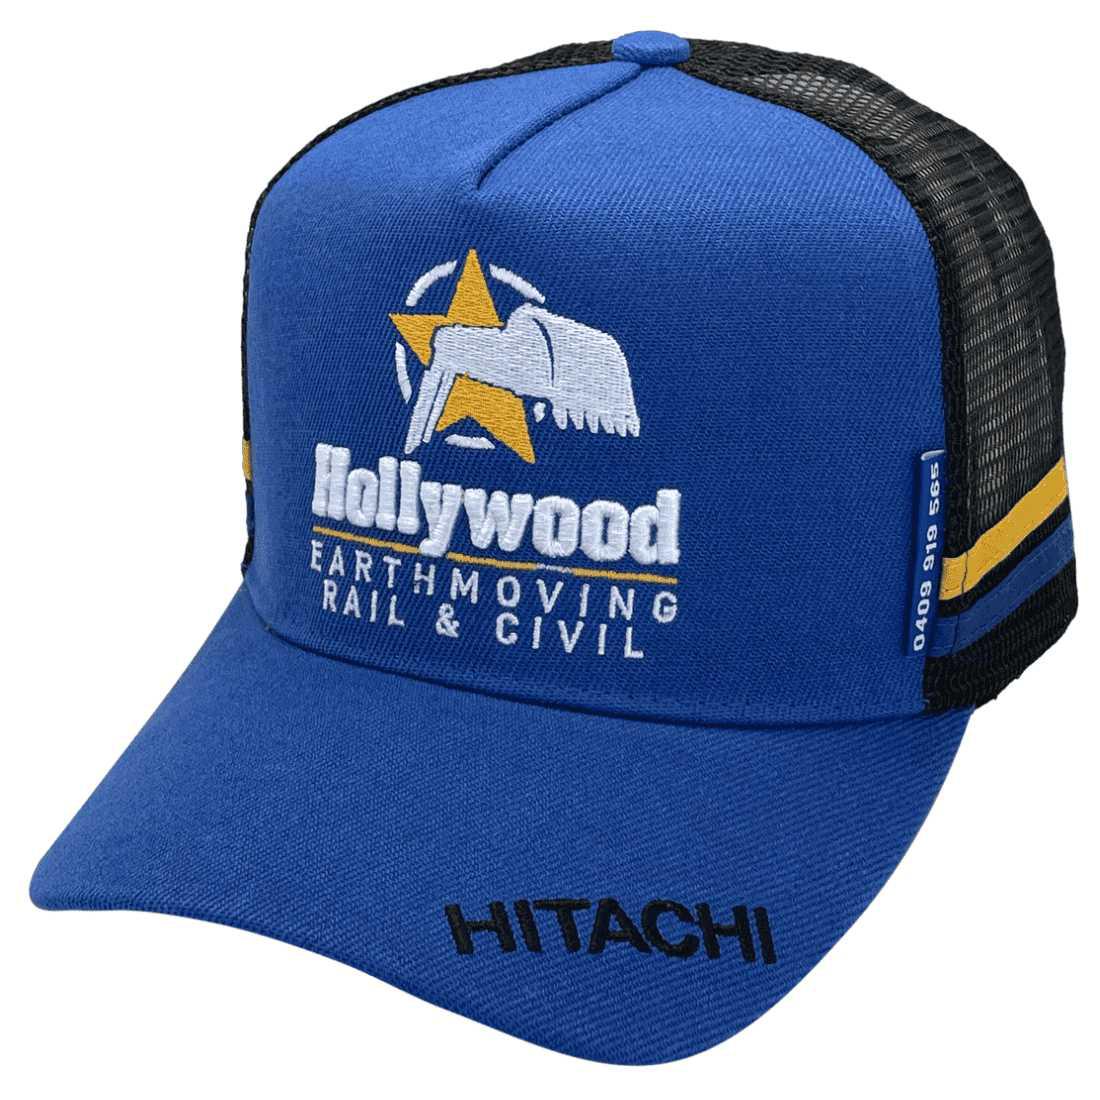 Hollywood Earthmoving Rail Civil HP Midrange Aussie Trucker Hats